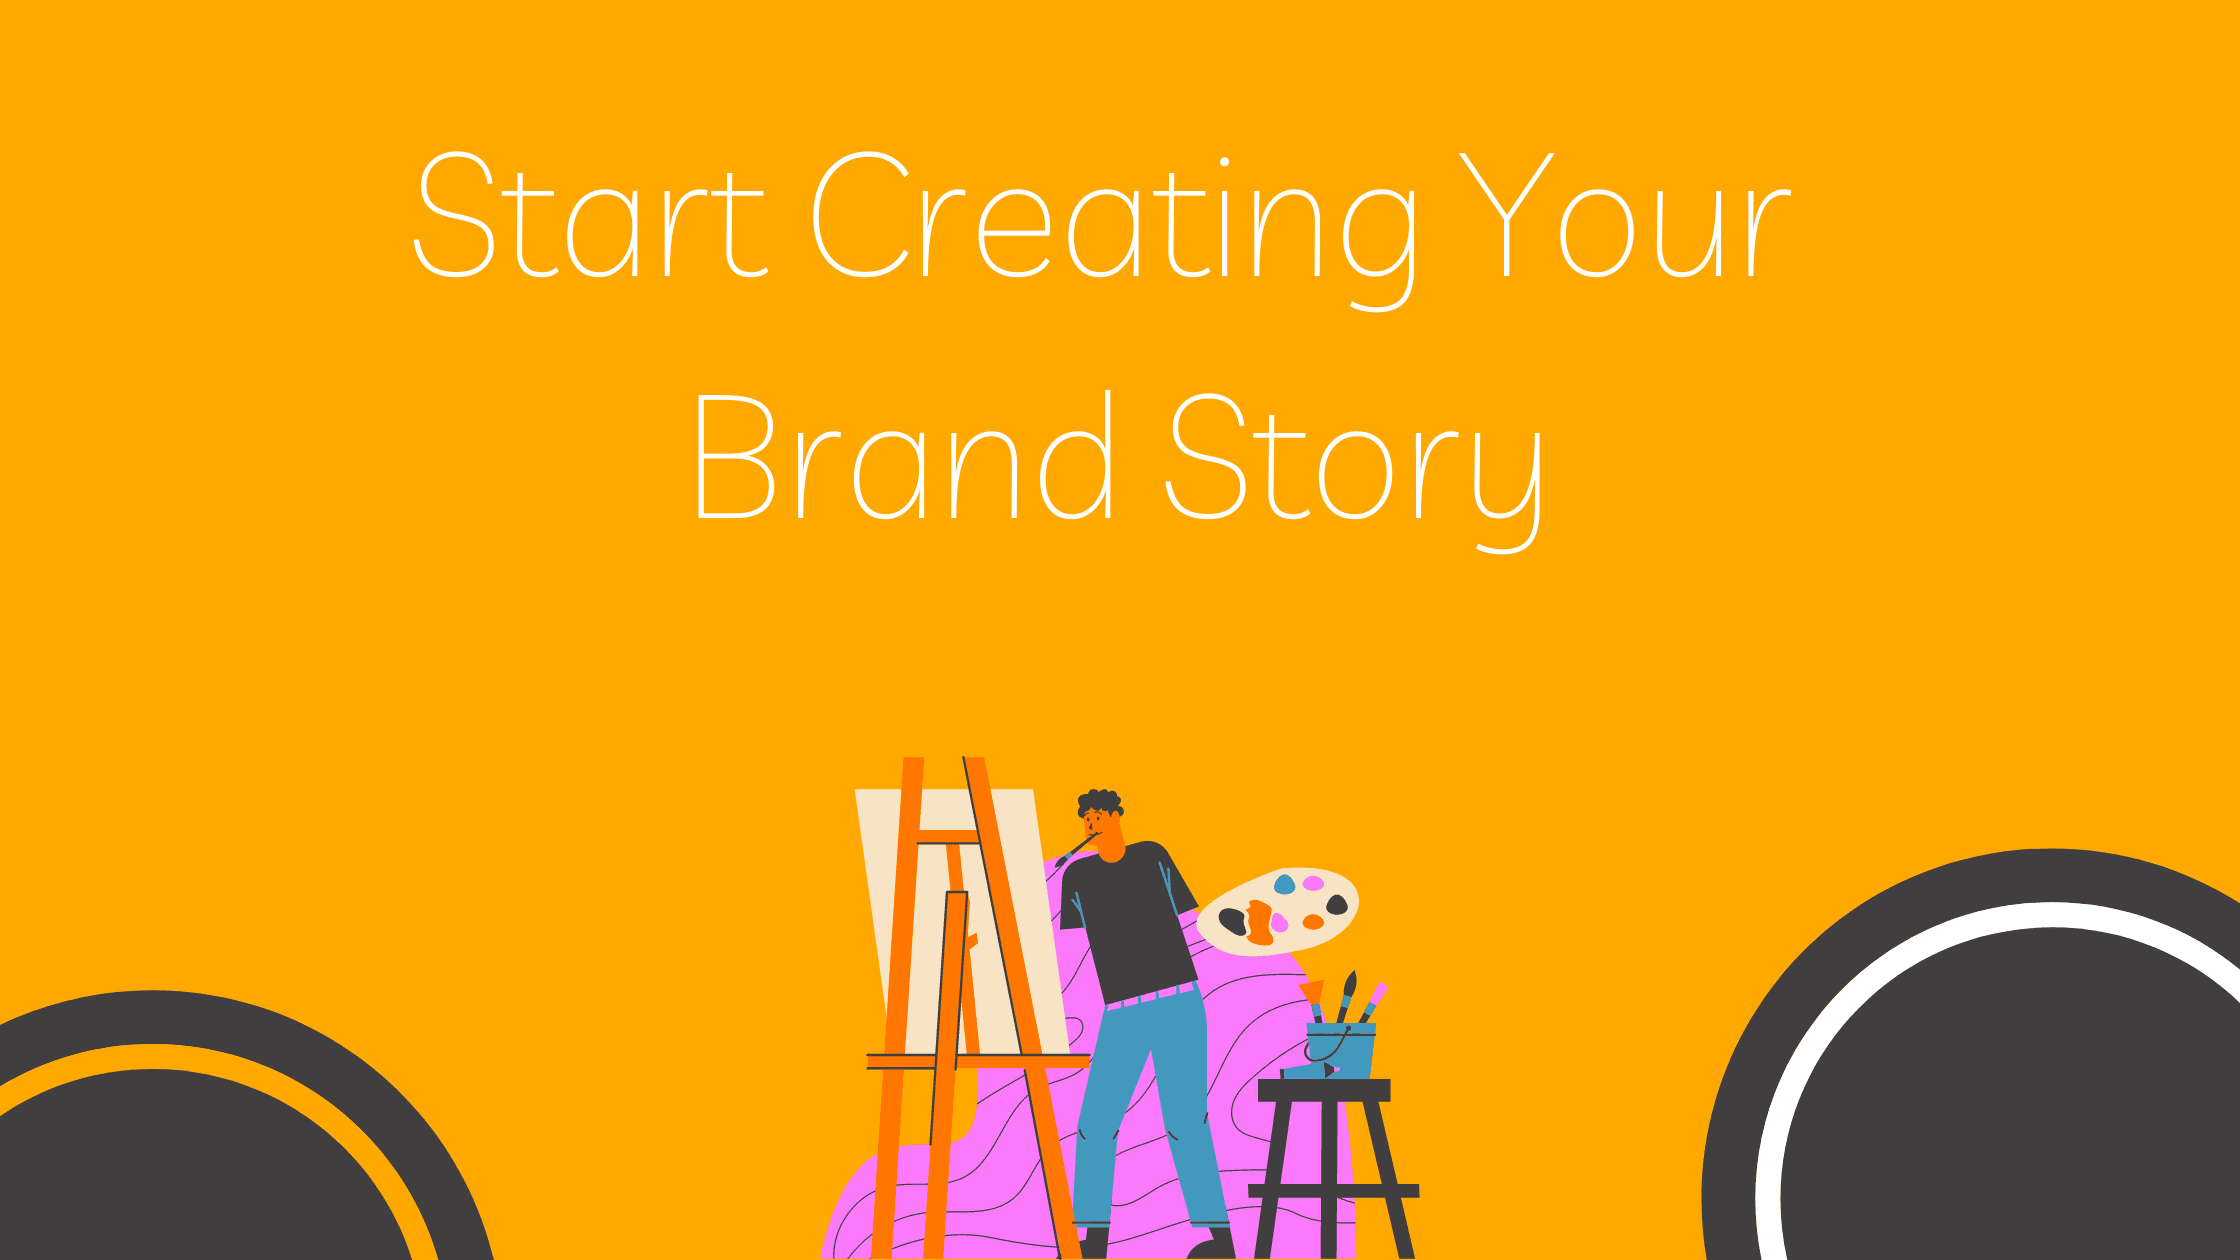 Inbound Marketing and Brand Story